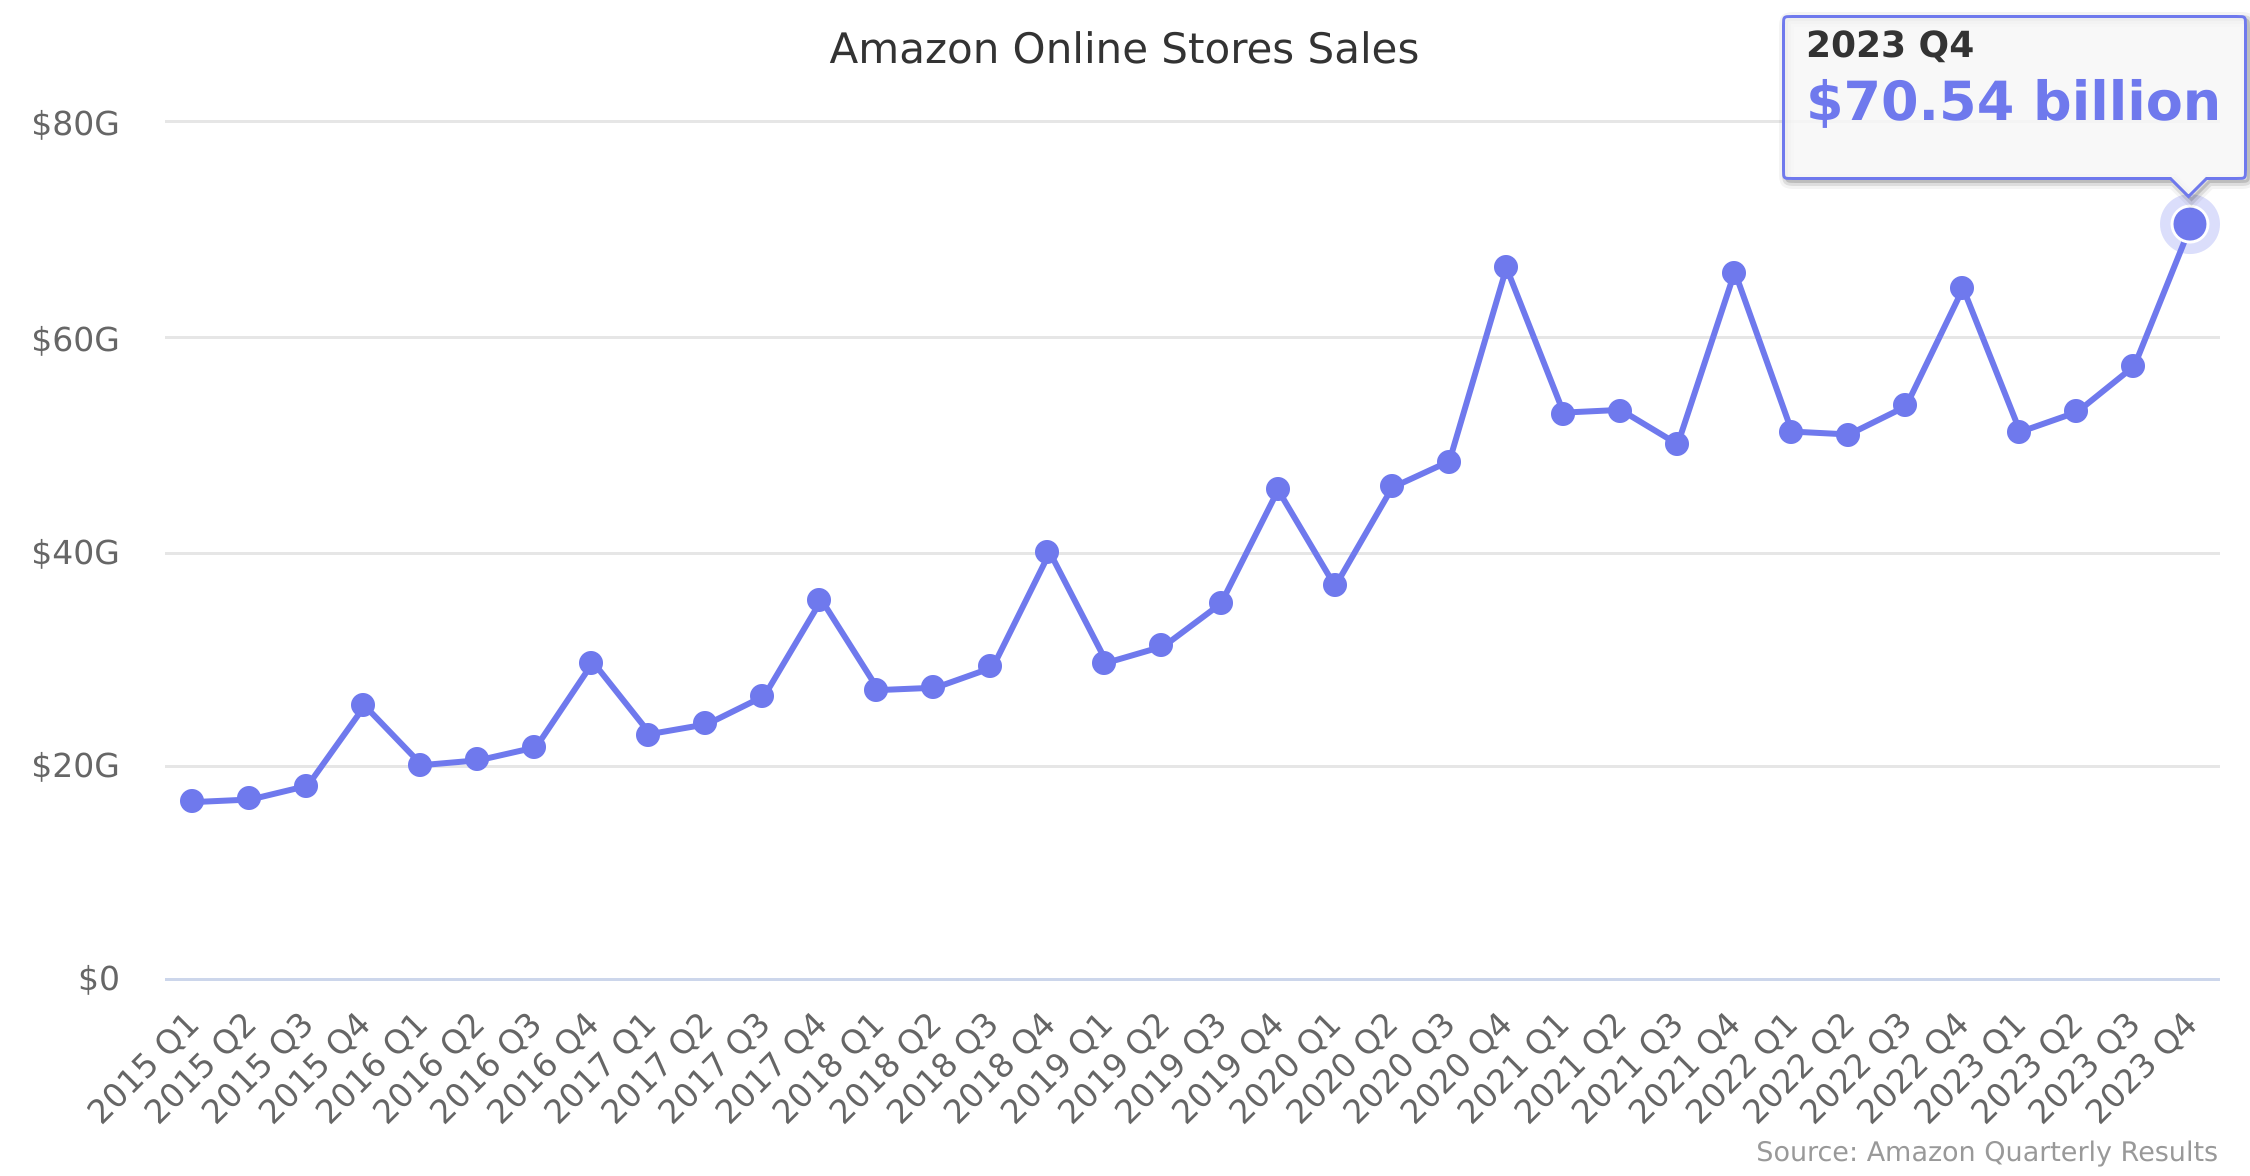 Amazon Online Stores Sales